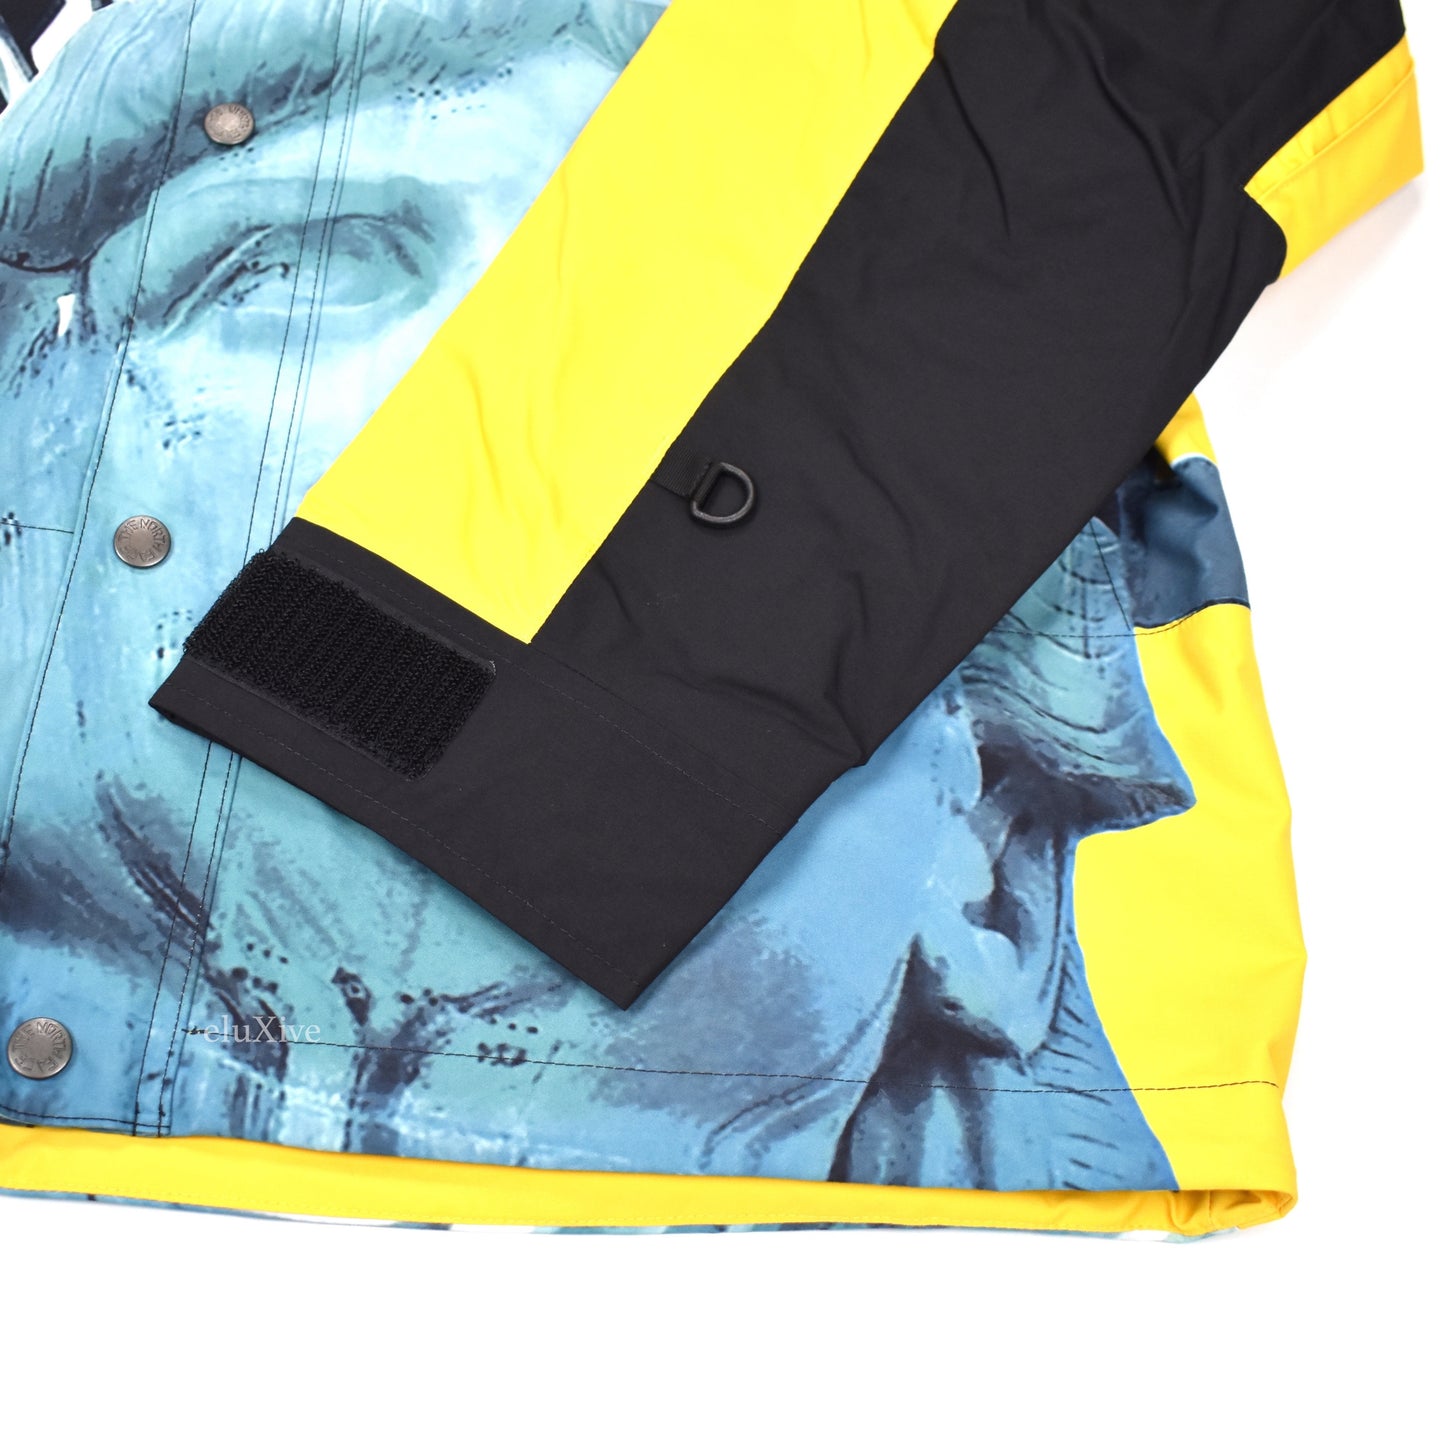 Supreme x The North Face - Liberty Print Mountain Jacket (Yellow)